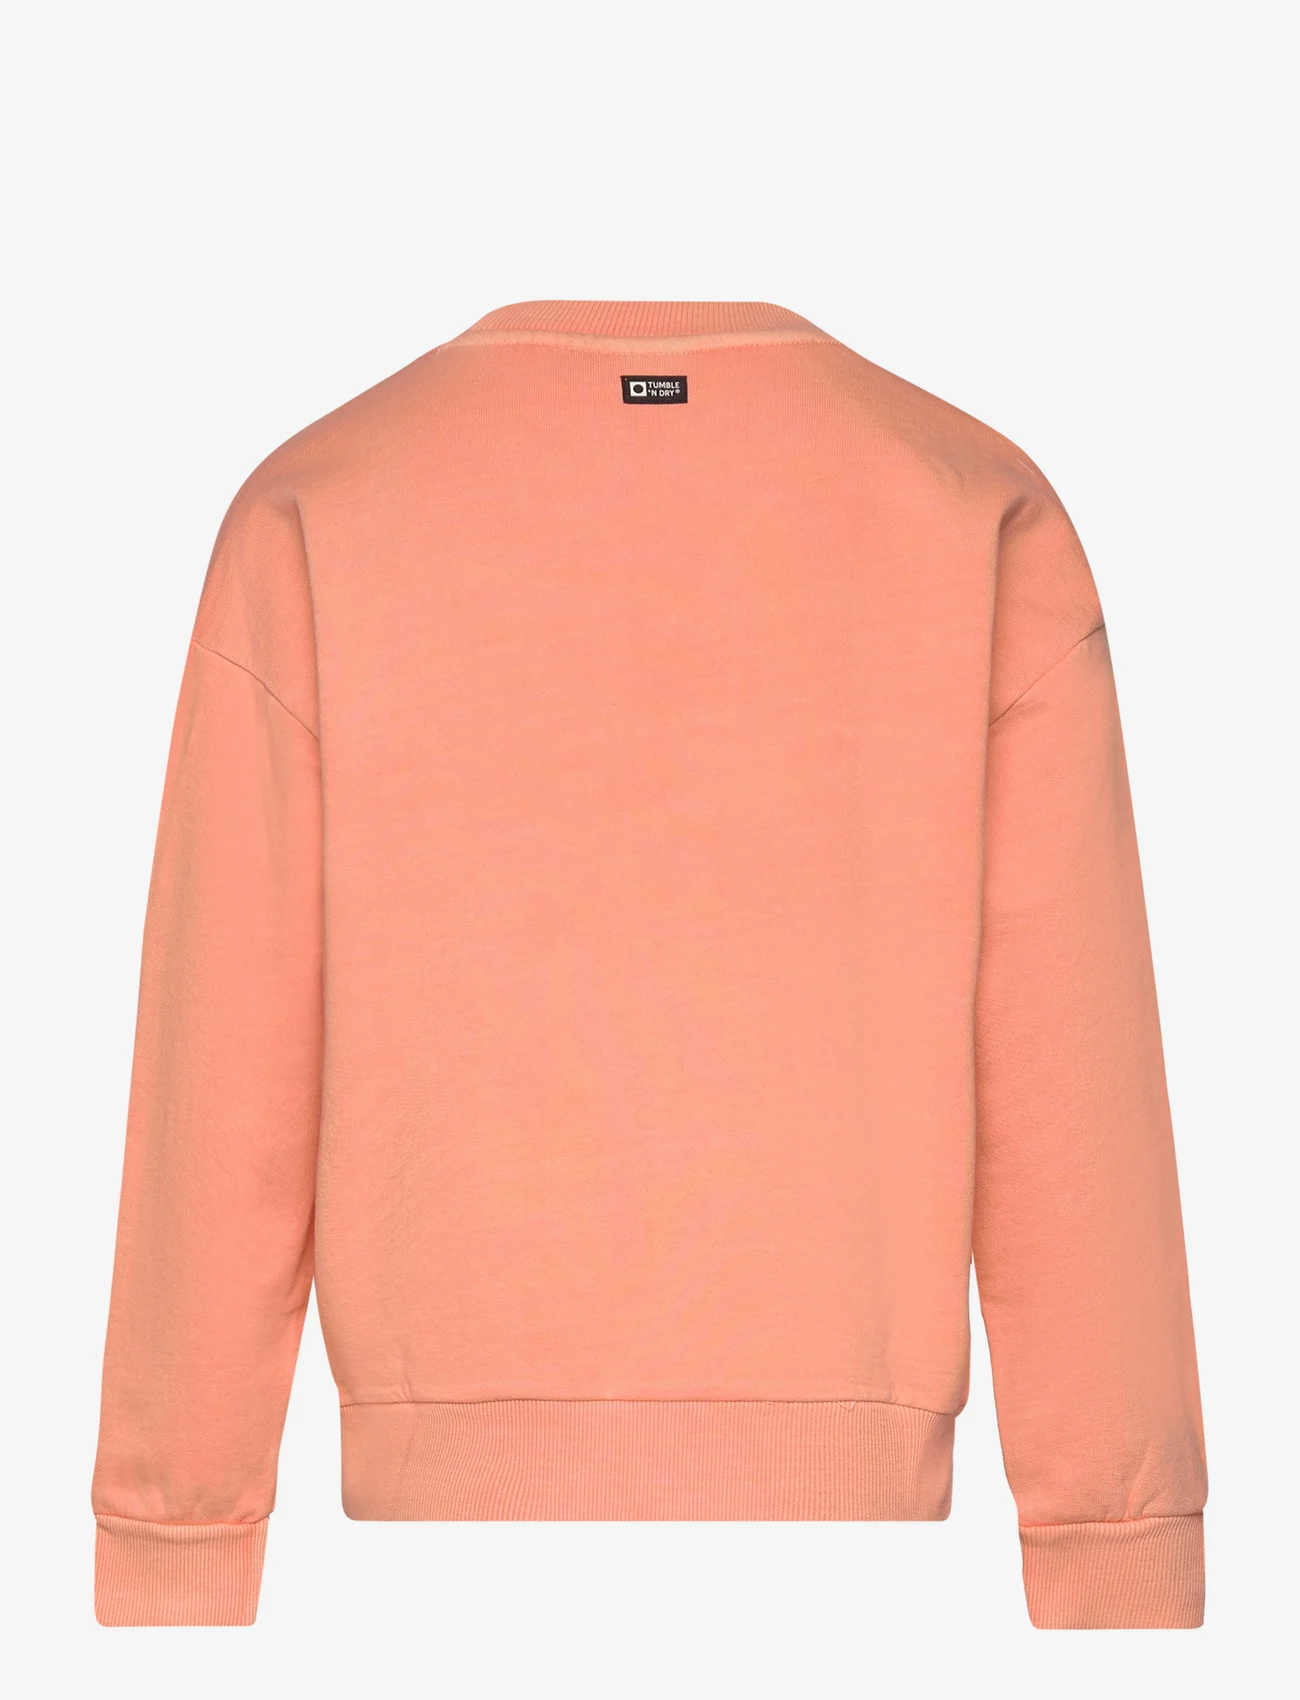 TUMBLE 'N DRY - Golden state - sweatshirts - orange - 1